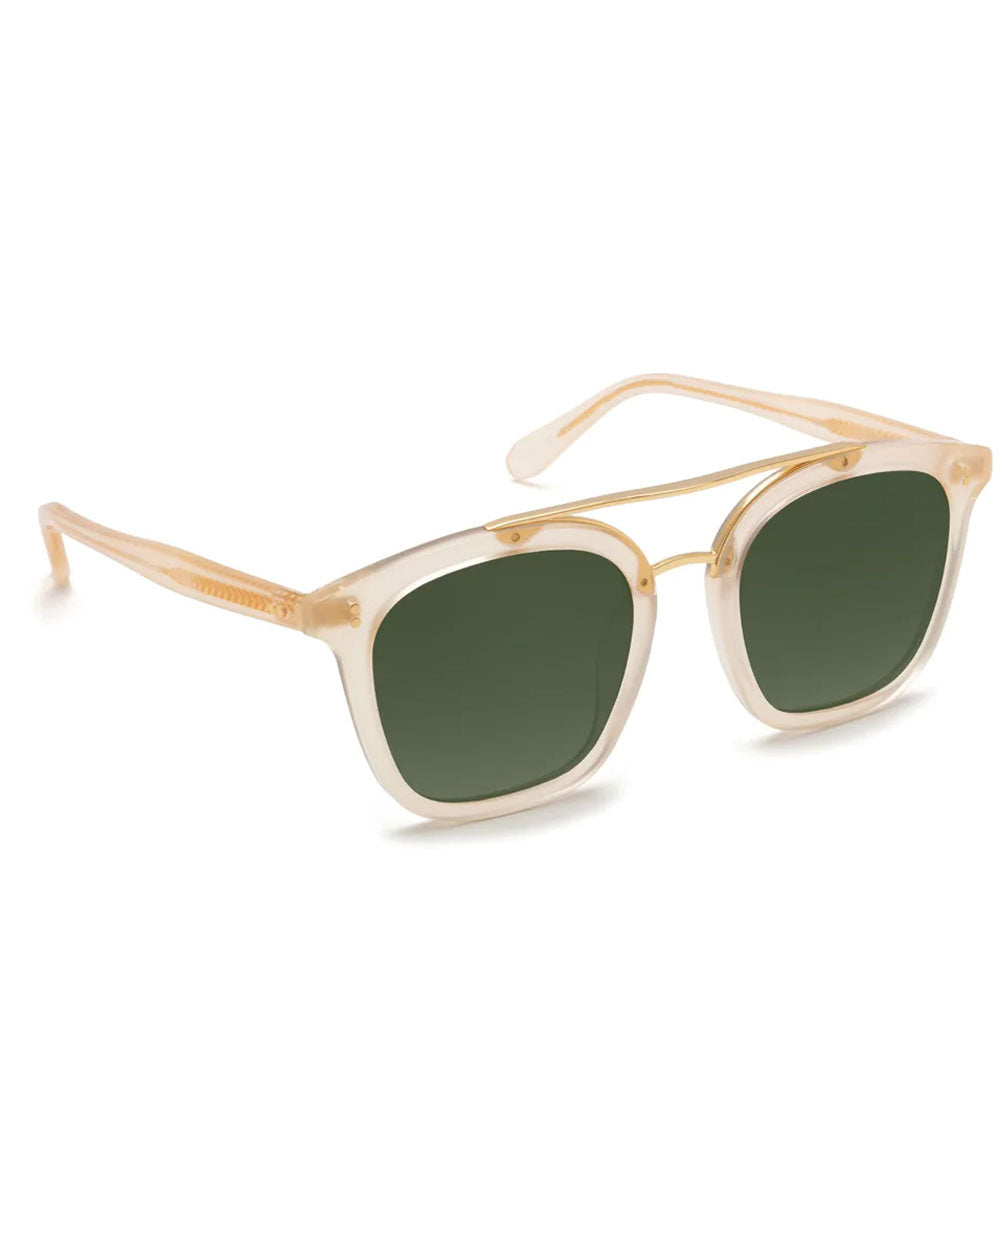 Coliseum Sunglasses in Blonde 18k Mirrored